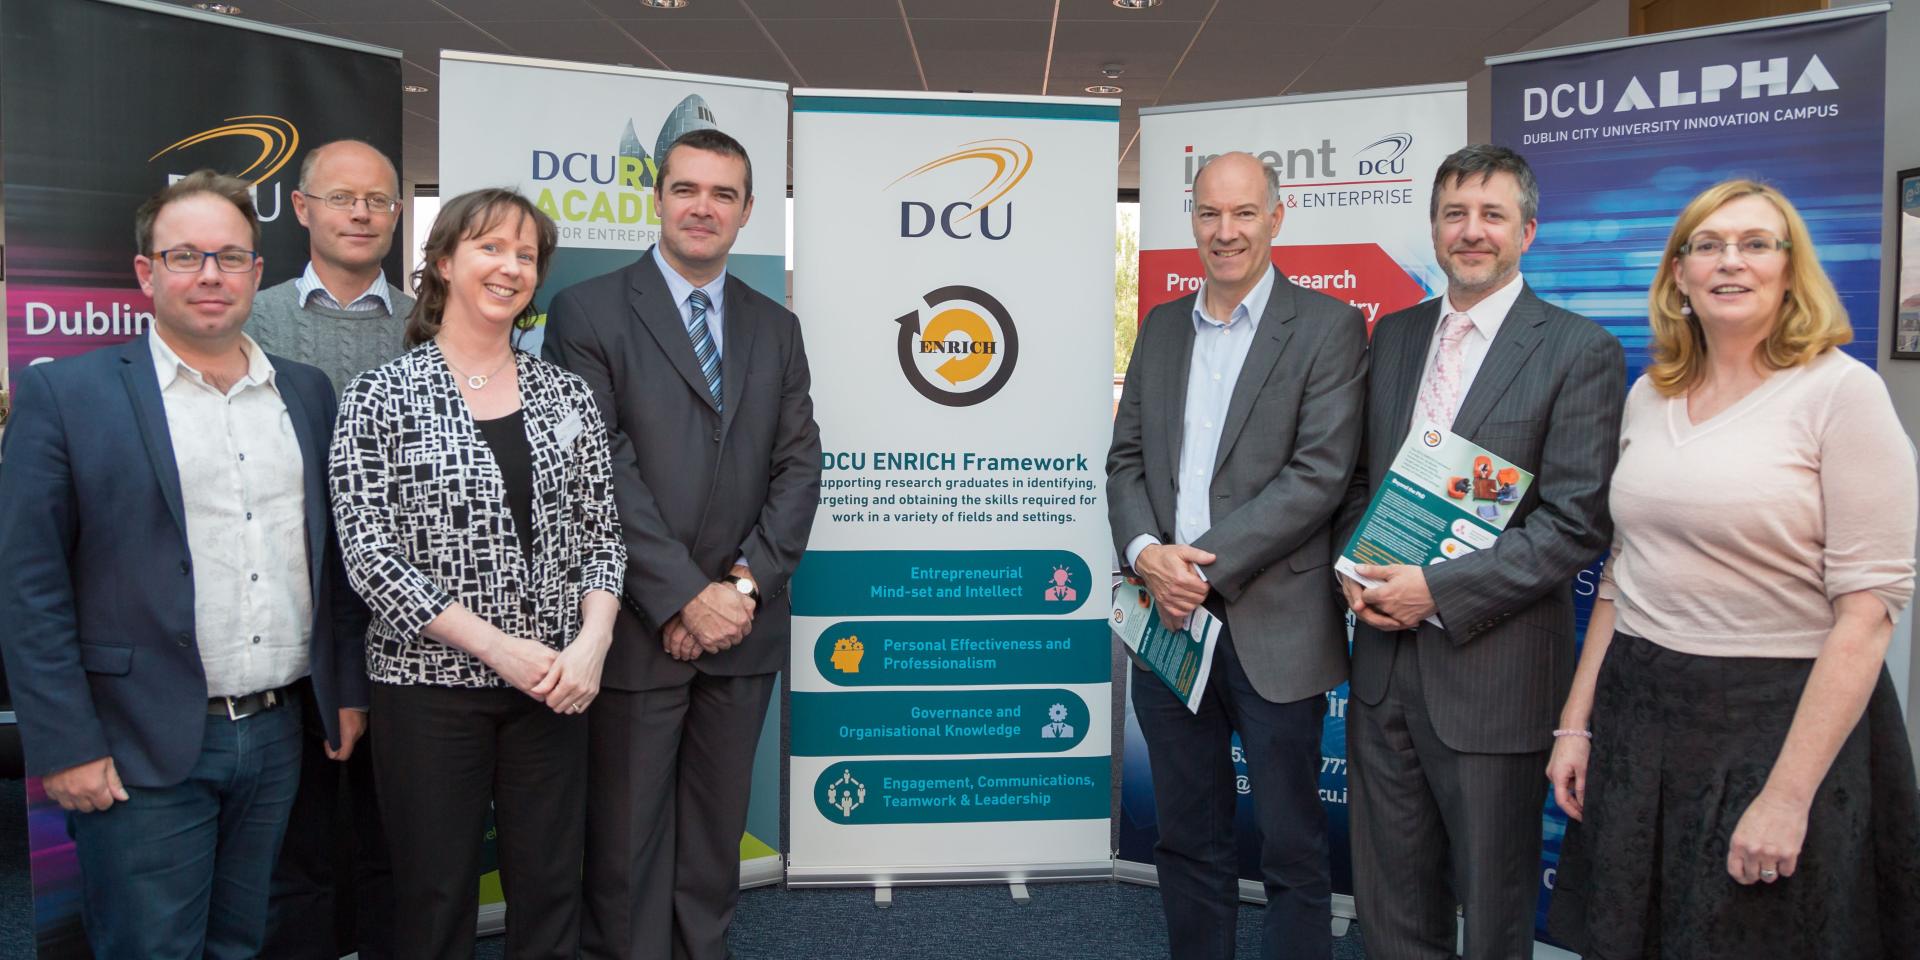 launch of DCU's ENRICH Framework